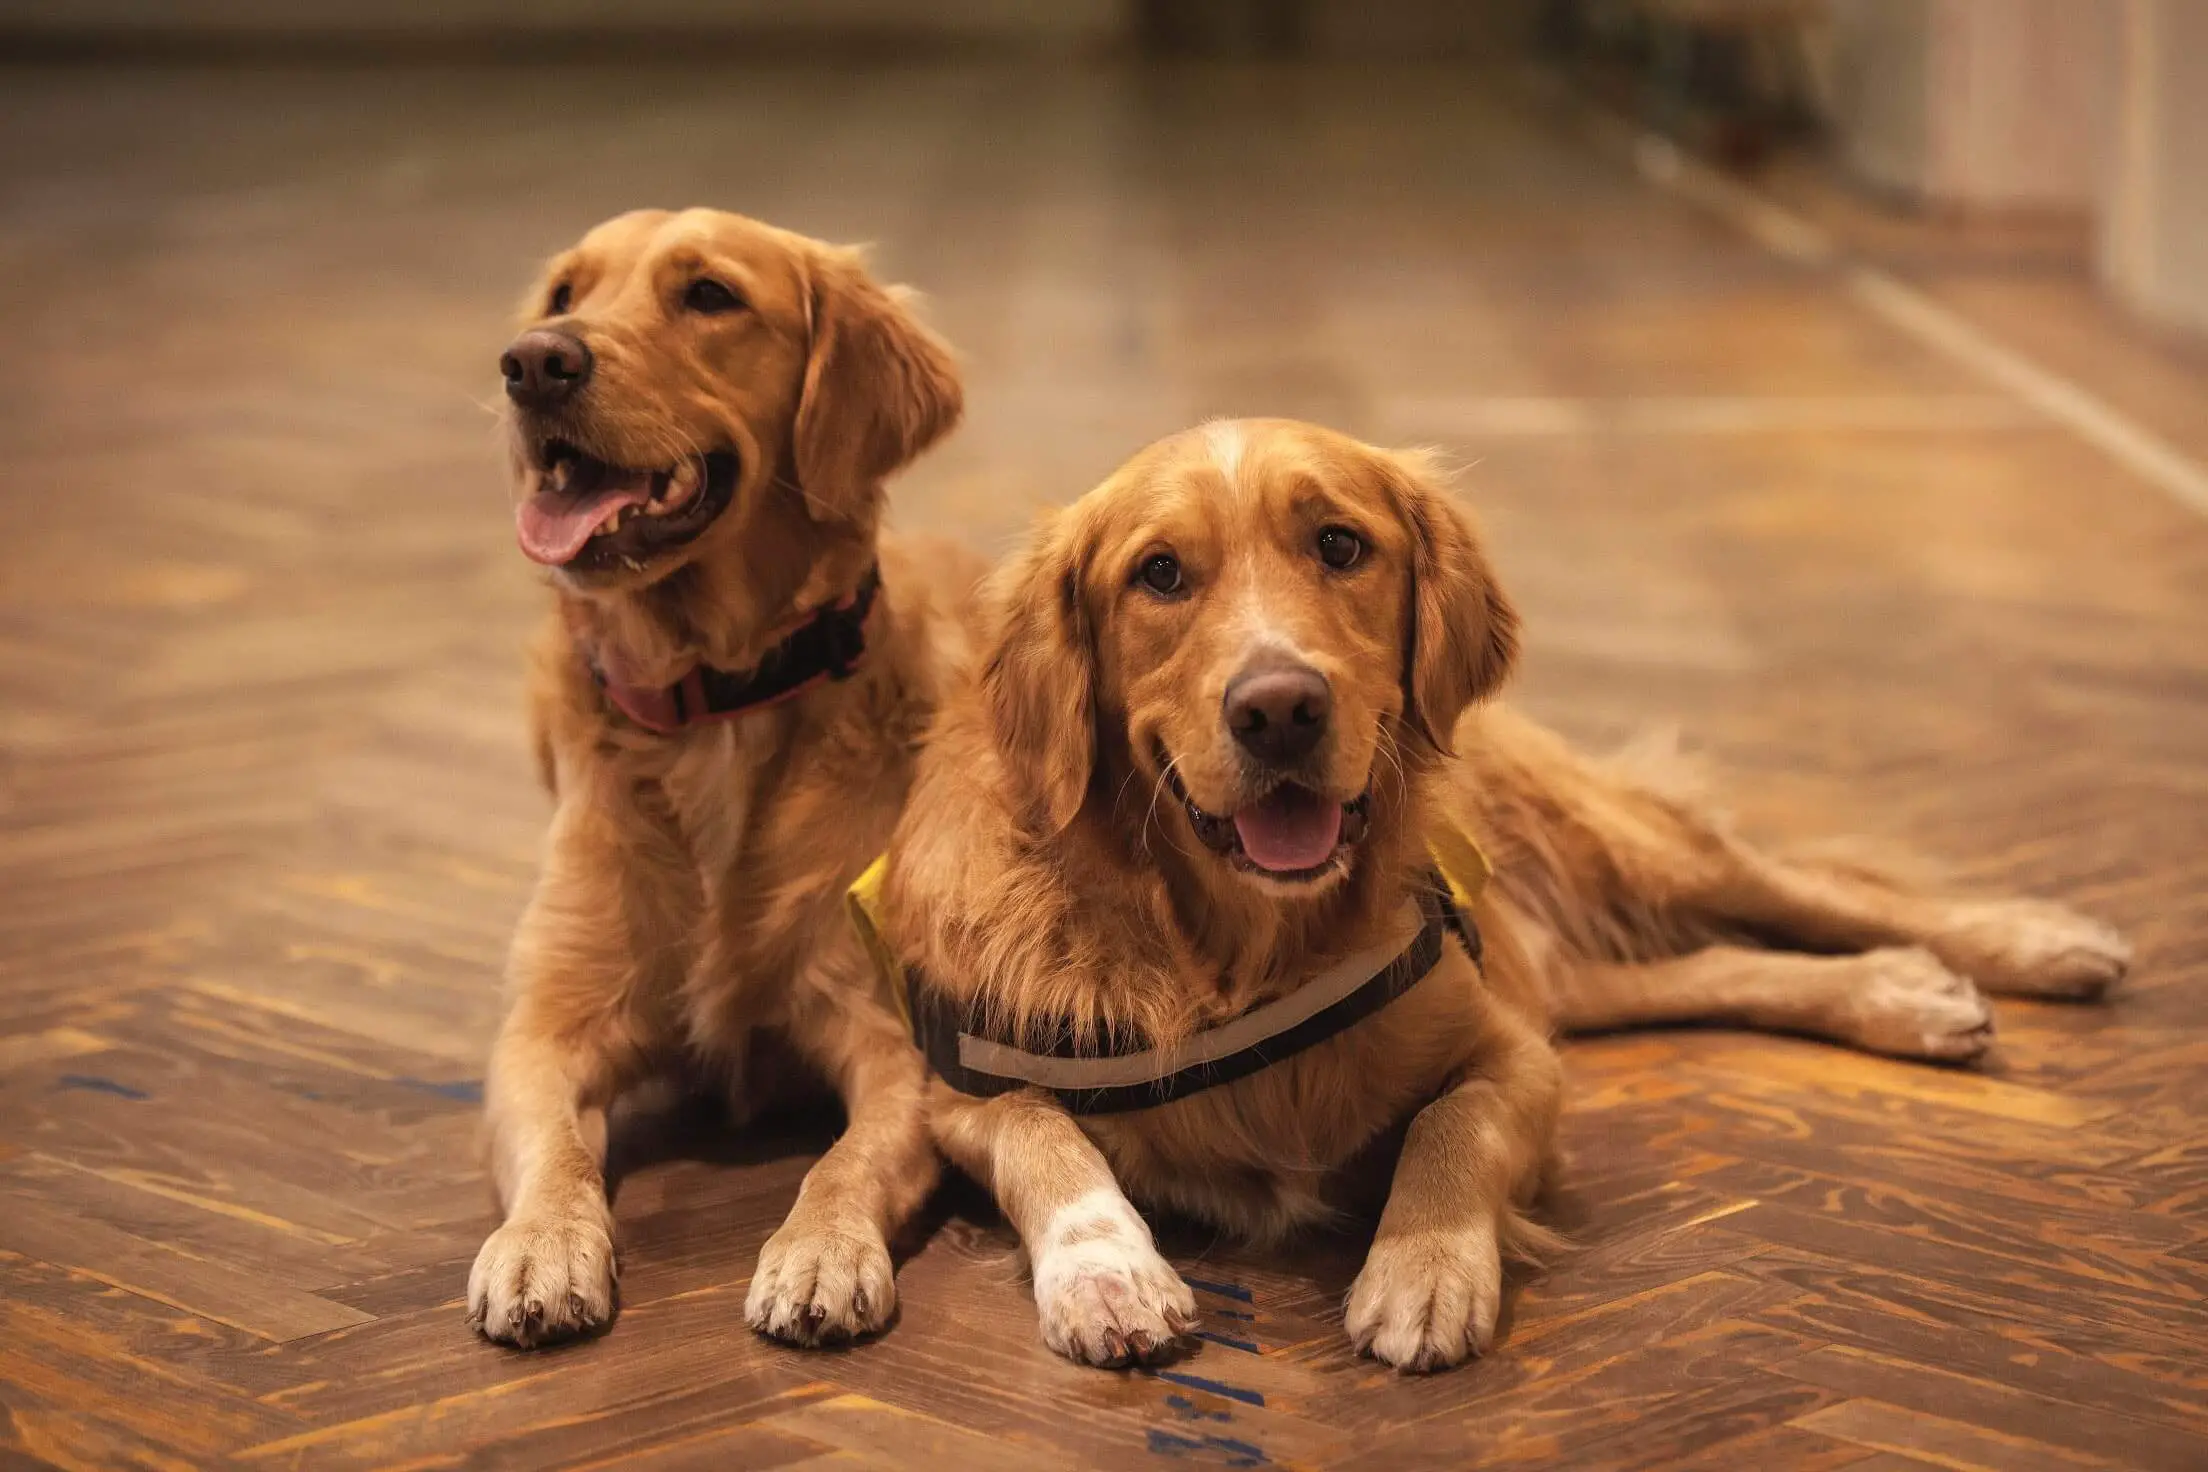 two golden retriever dogs